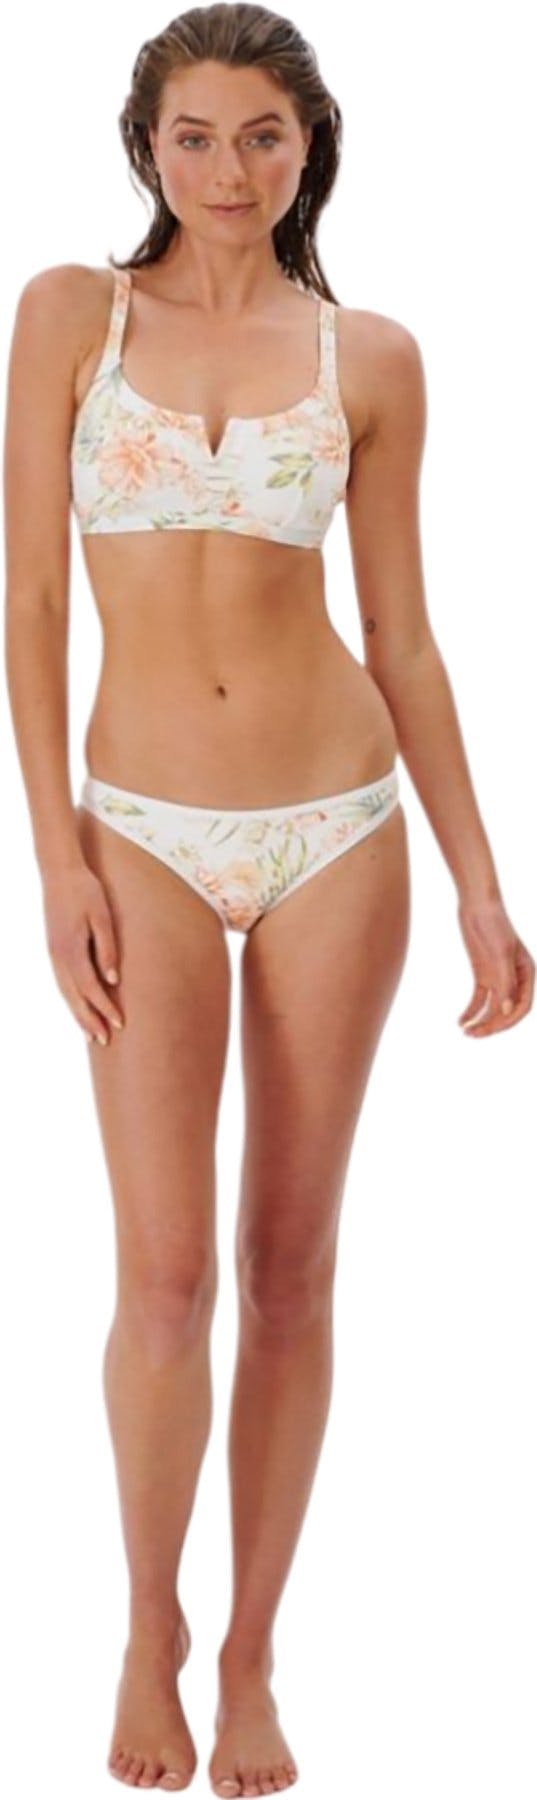 Product image for Sol Seeker DD Bikini Top - Women's